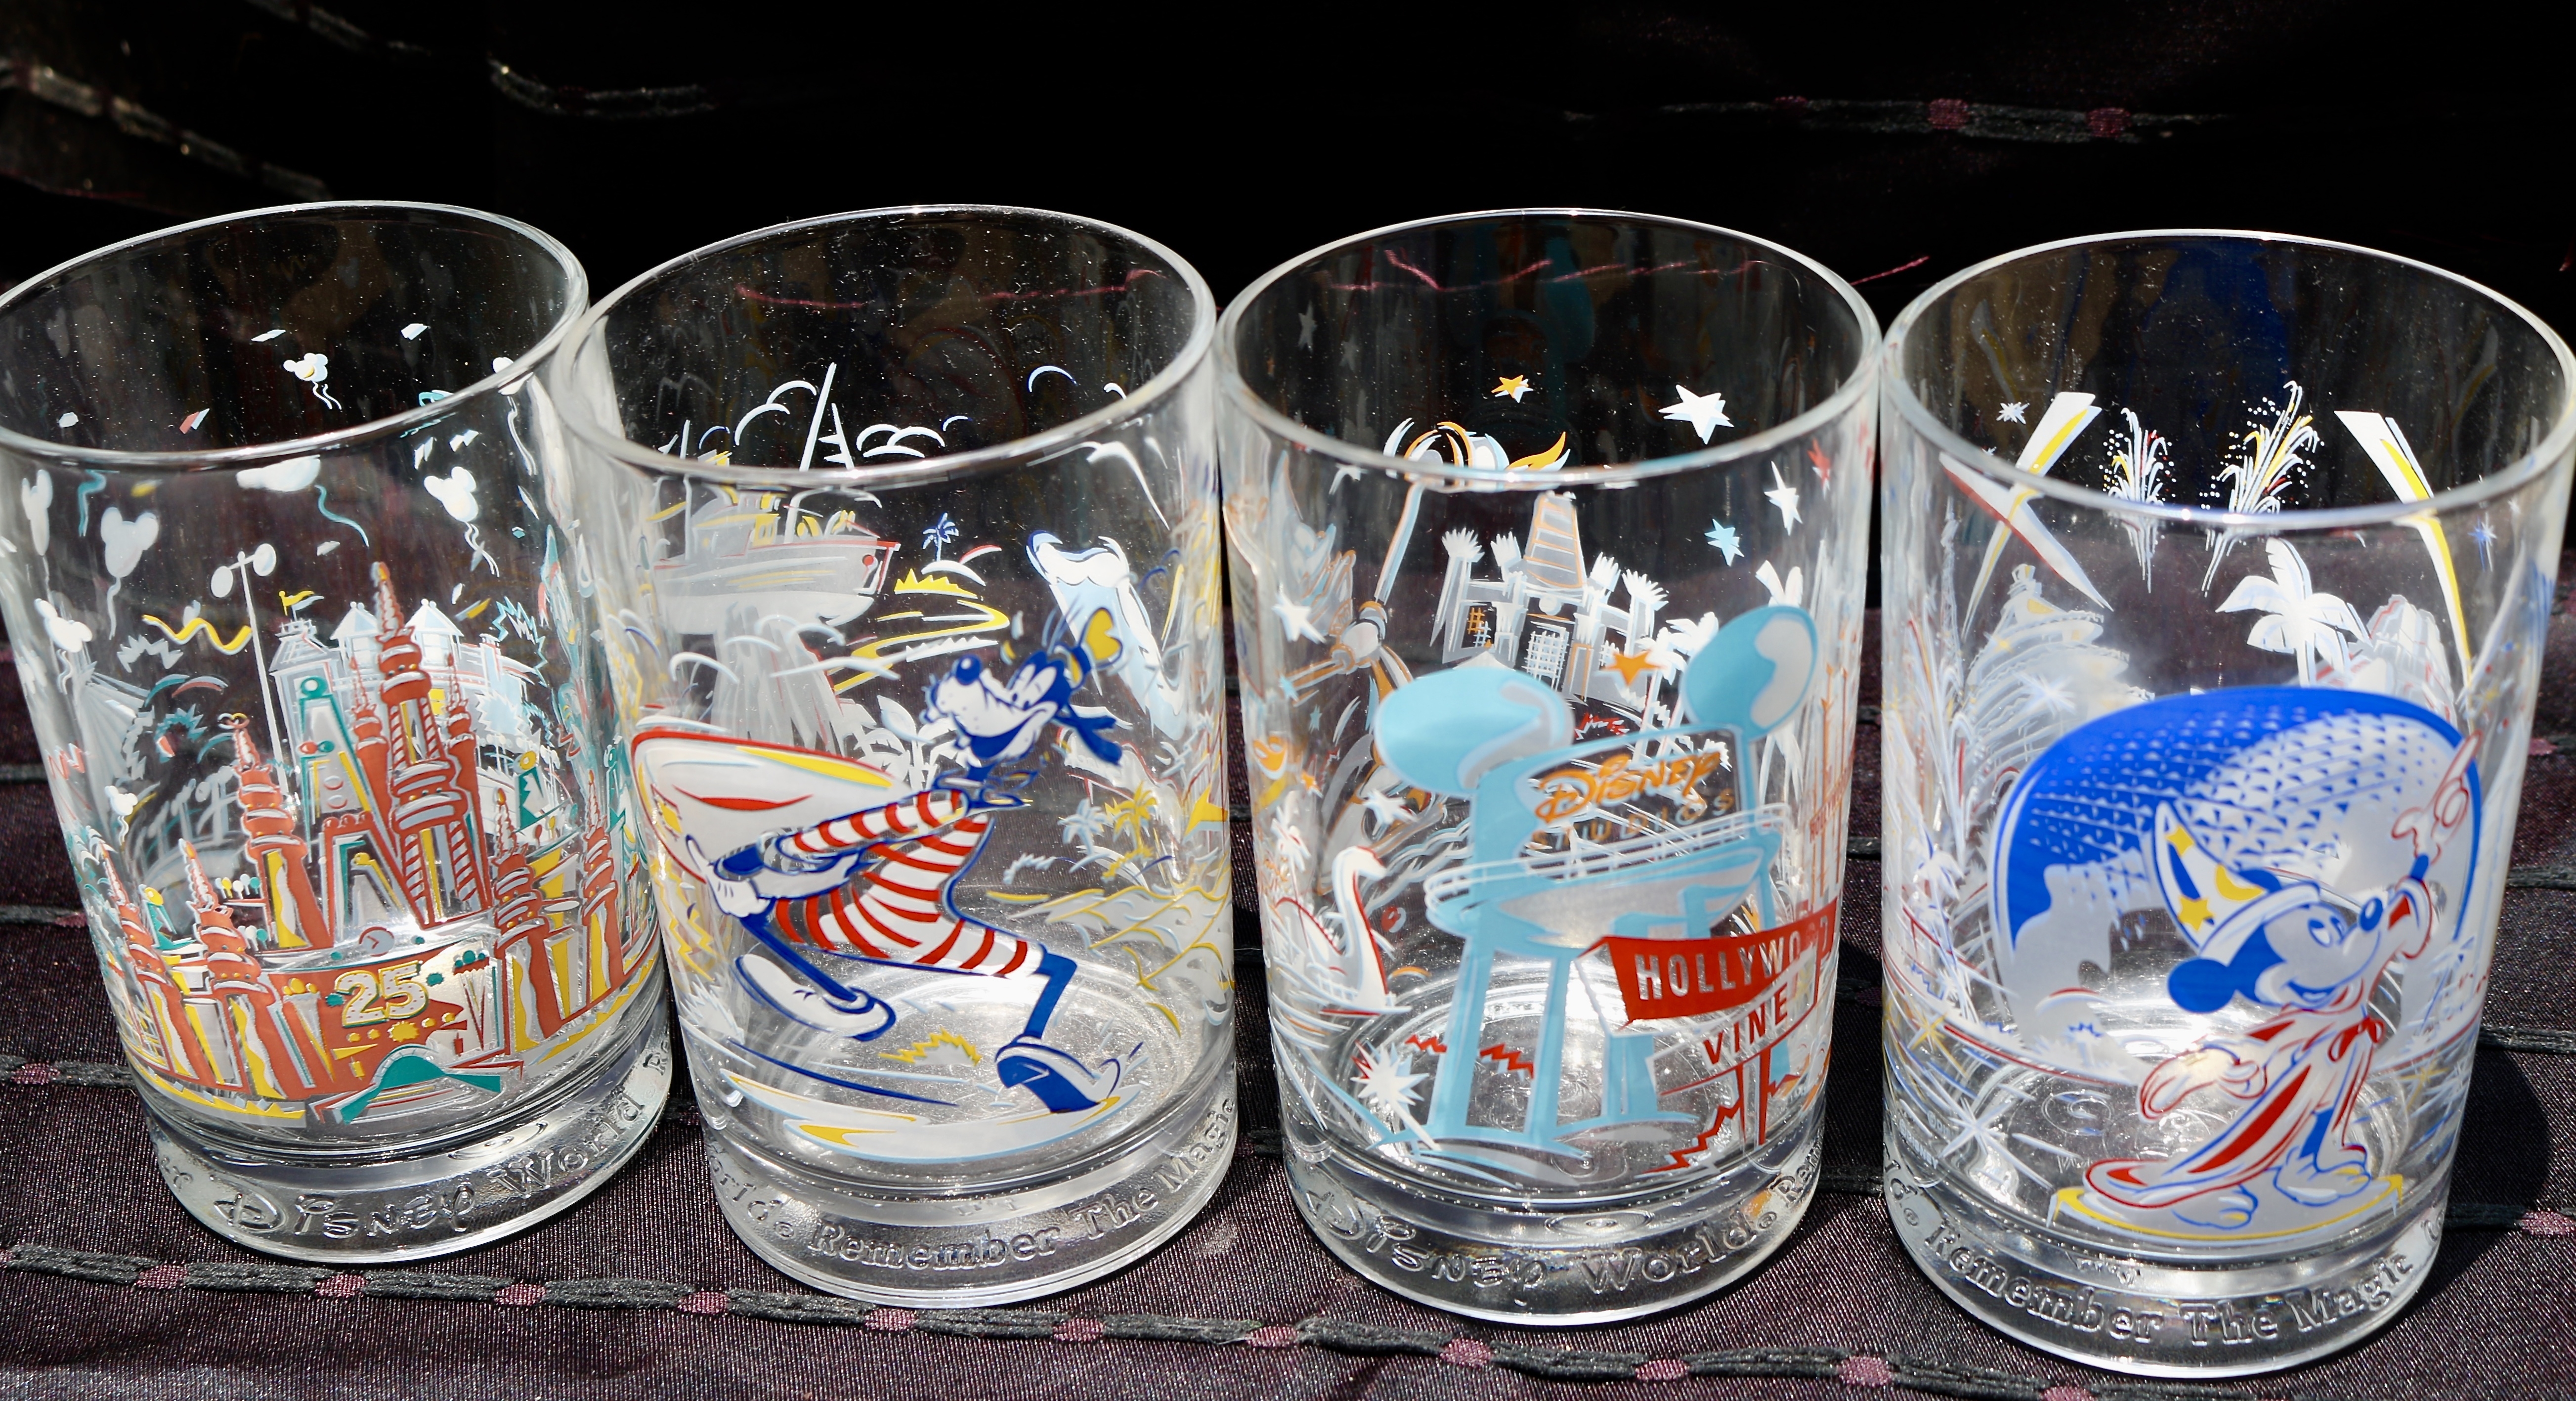 Walt Disney World 25th Anniversary glass set from McDonalds. Comes